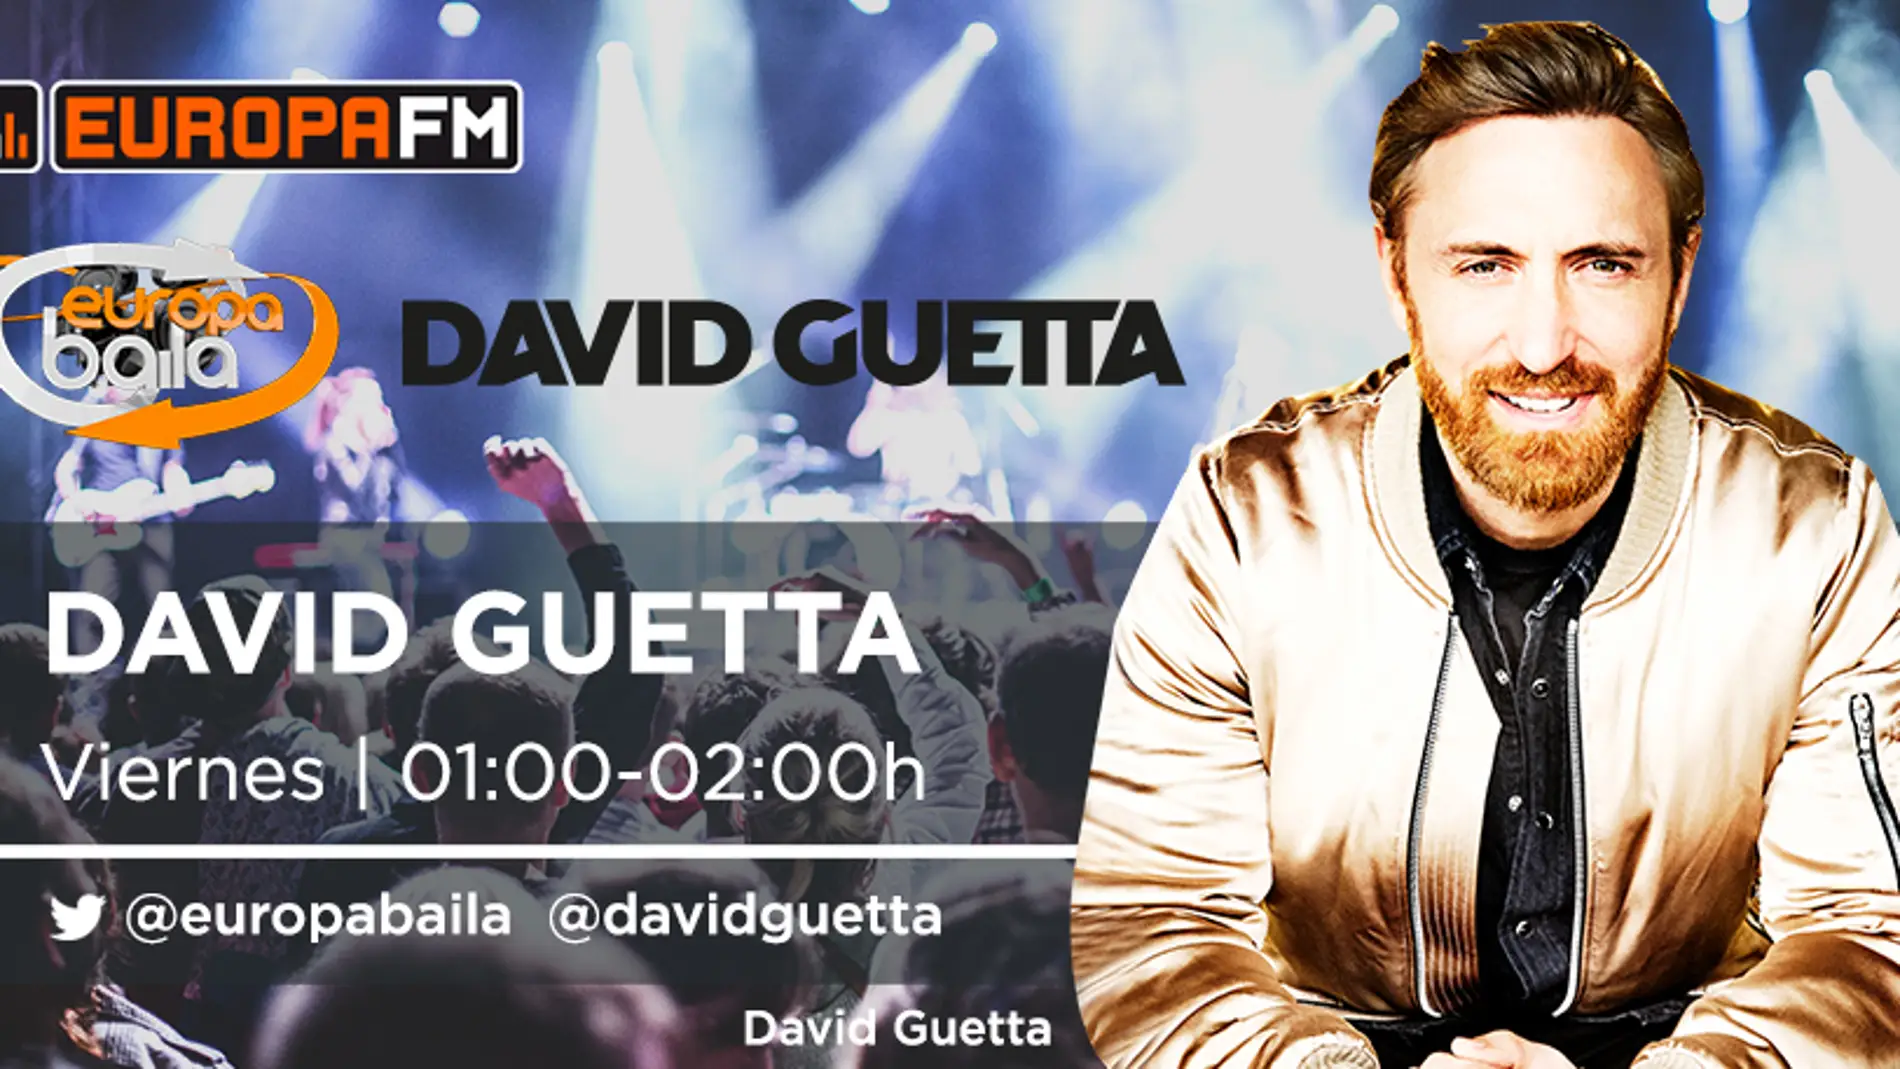 David Guetta en Europa FM 2017